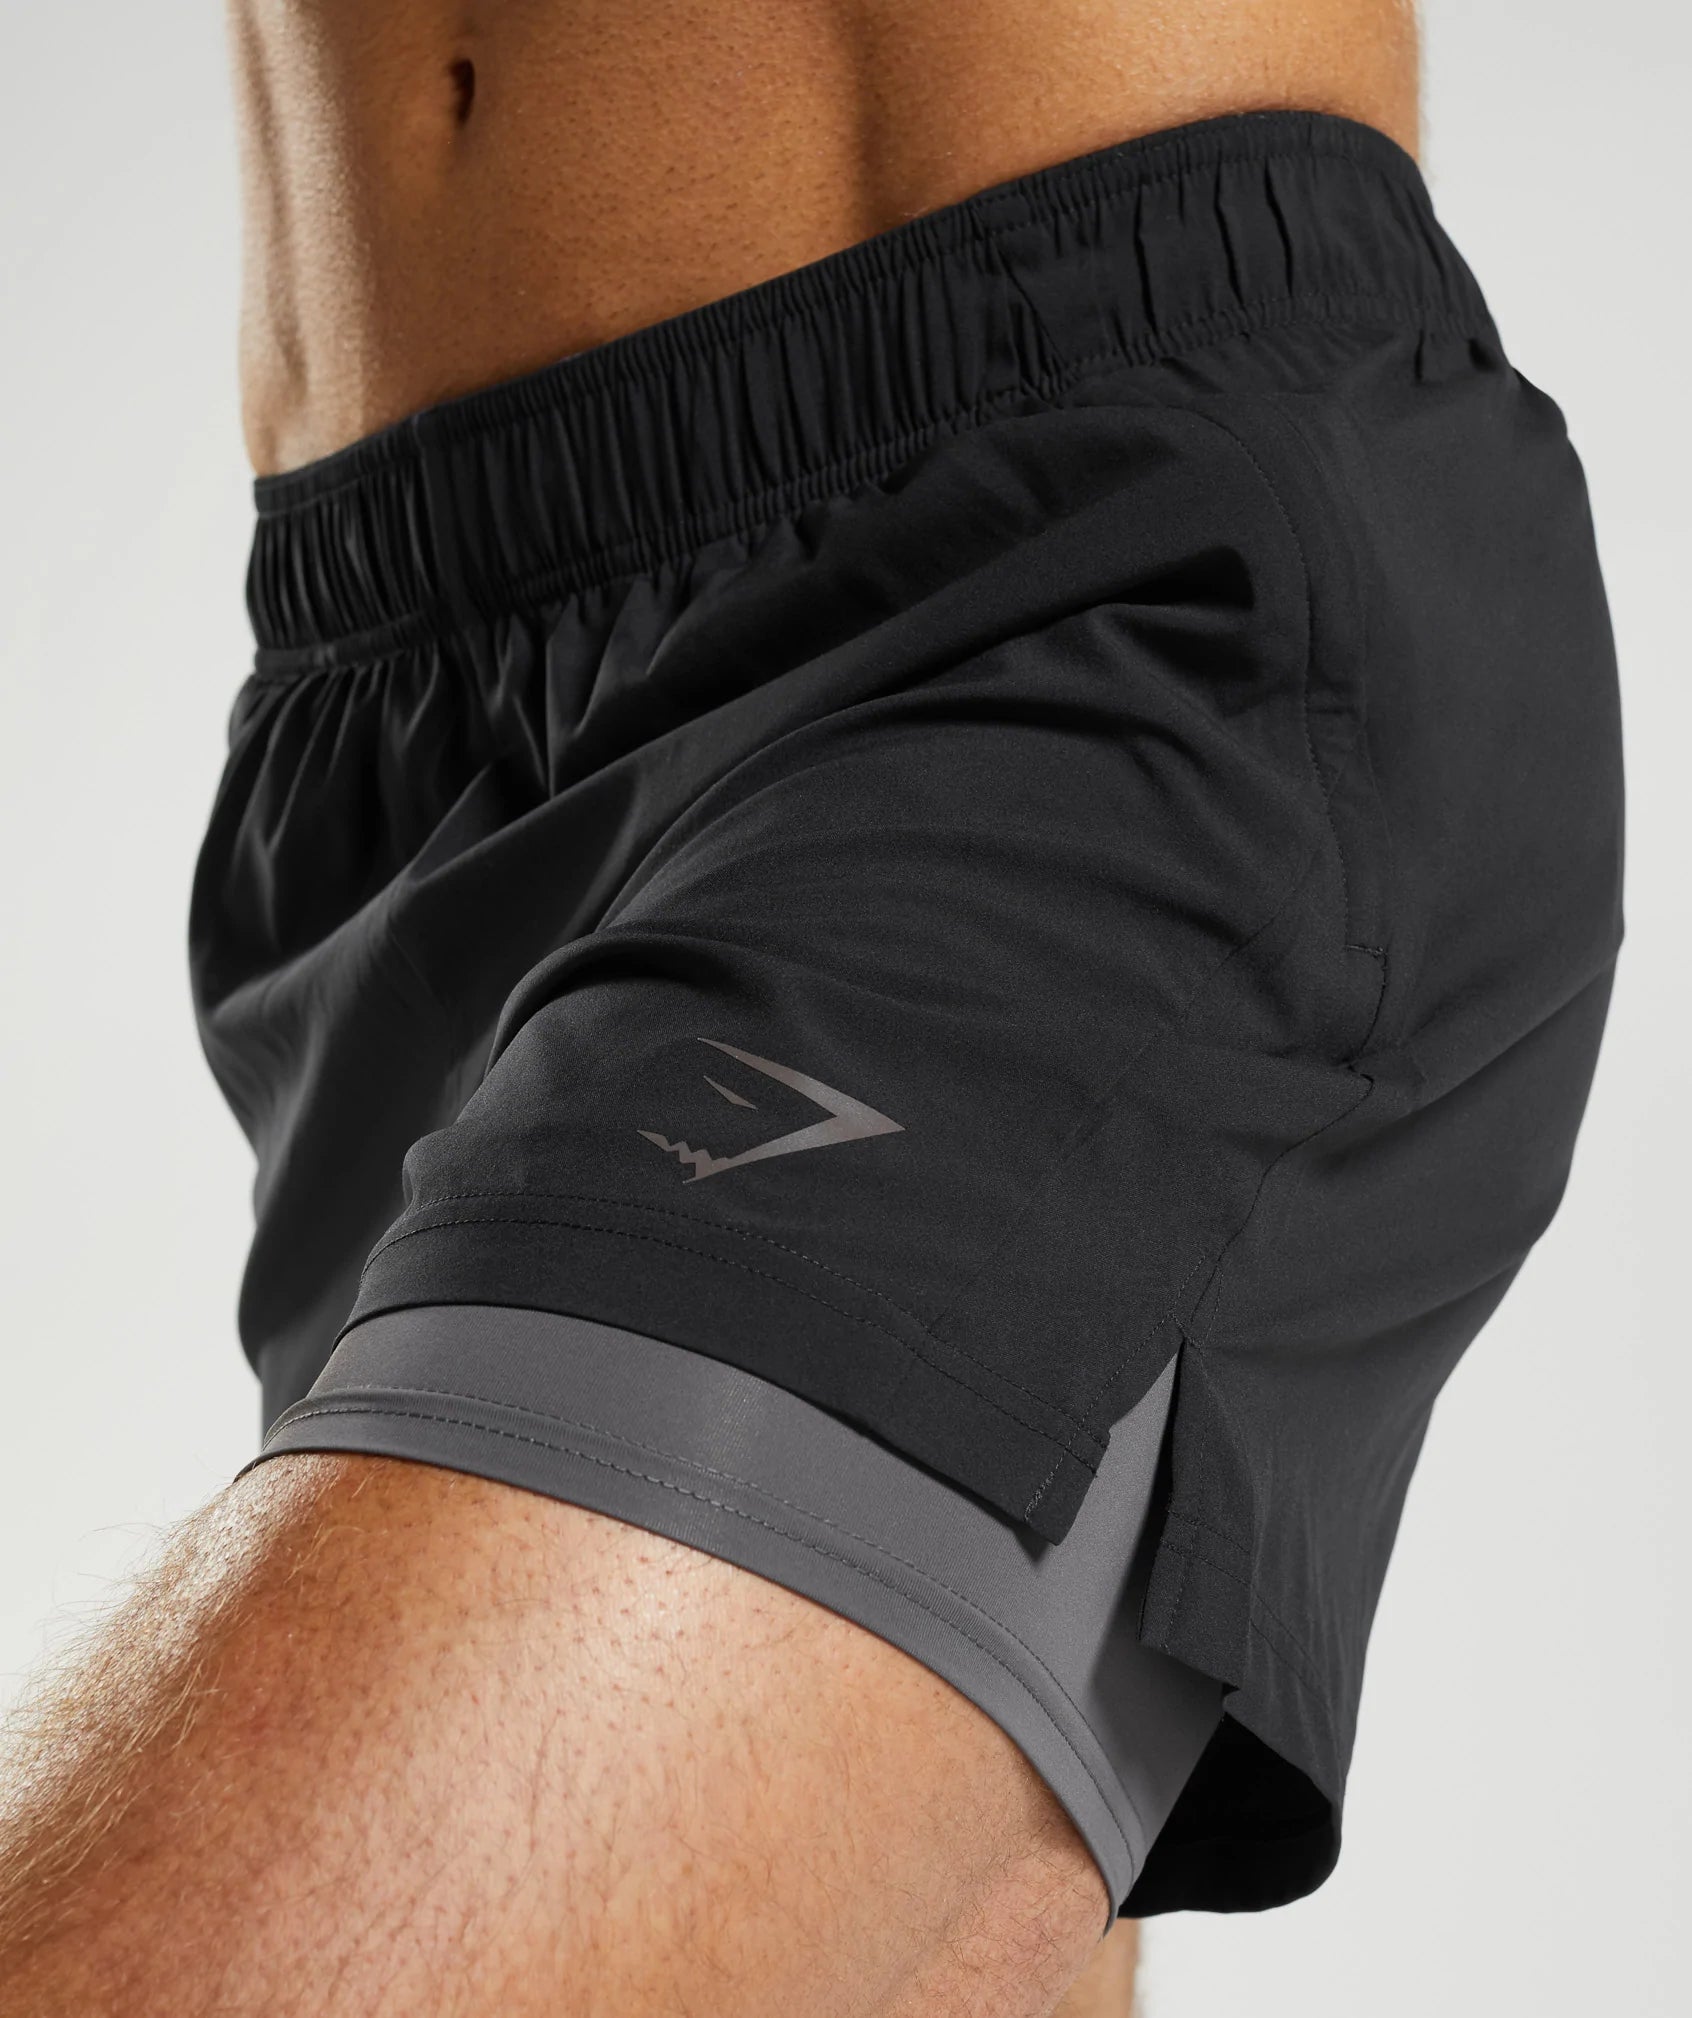 Gymshark Sport 5 2 In 1 Shorts - Black/Silhouette Grey